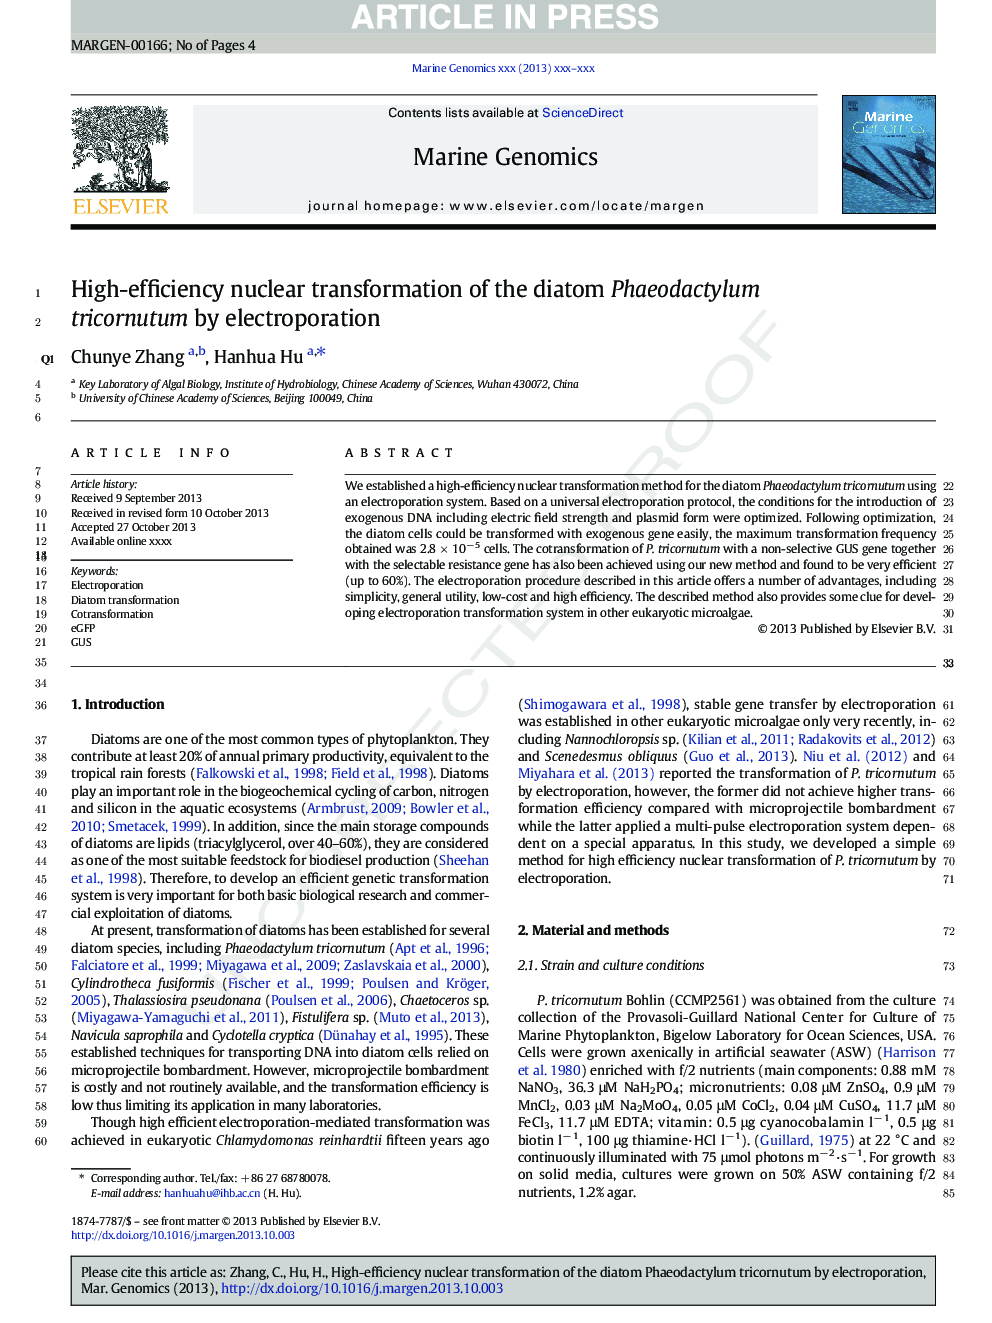 High-efficiency nuclear transformation of the diatom Phaeodactylum tricornutum by electroporation